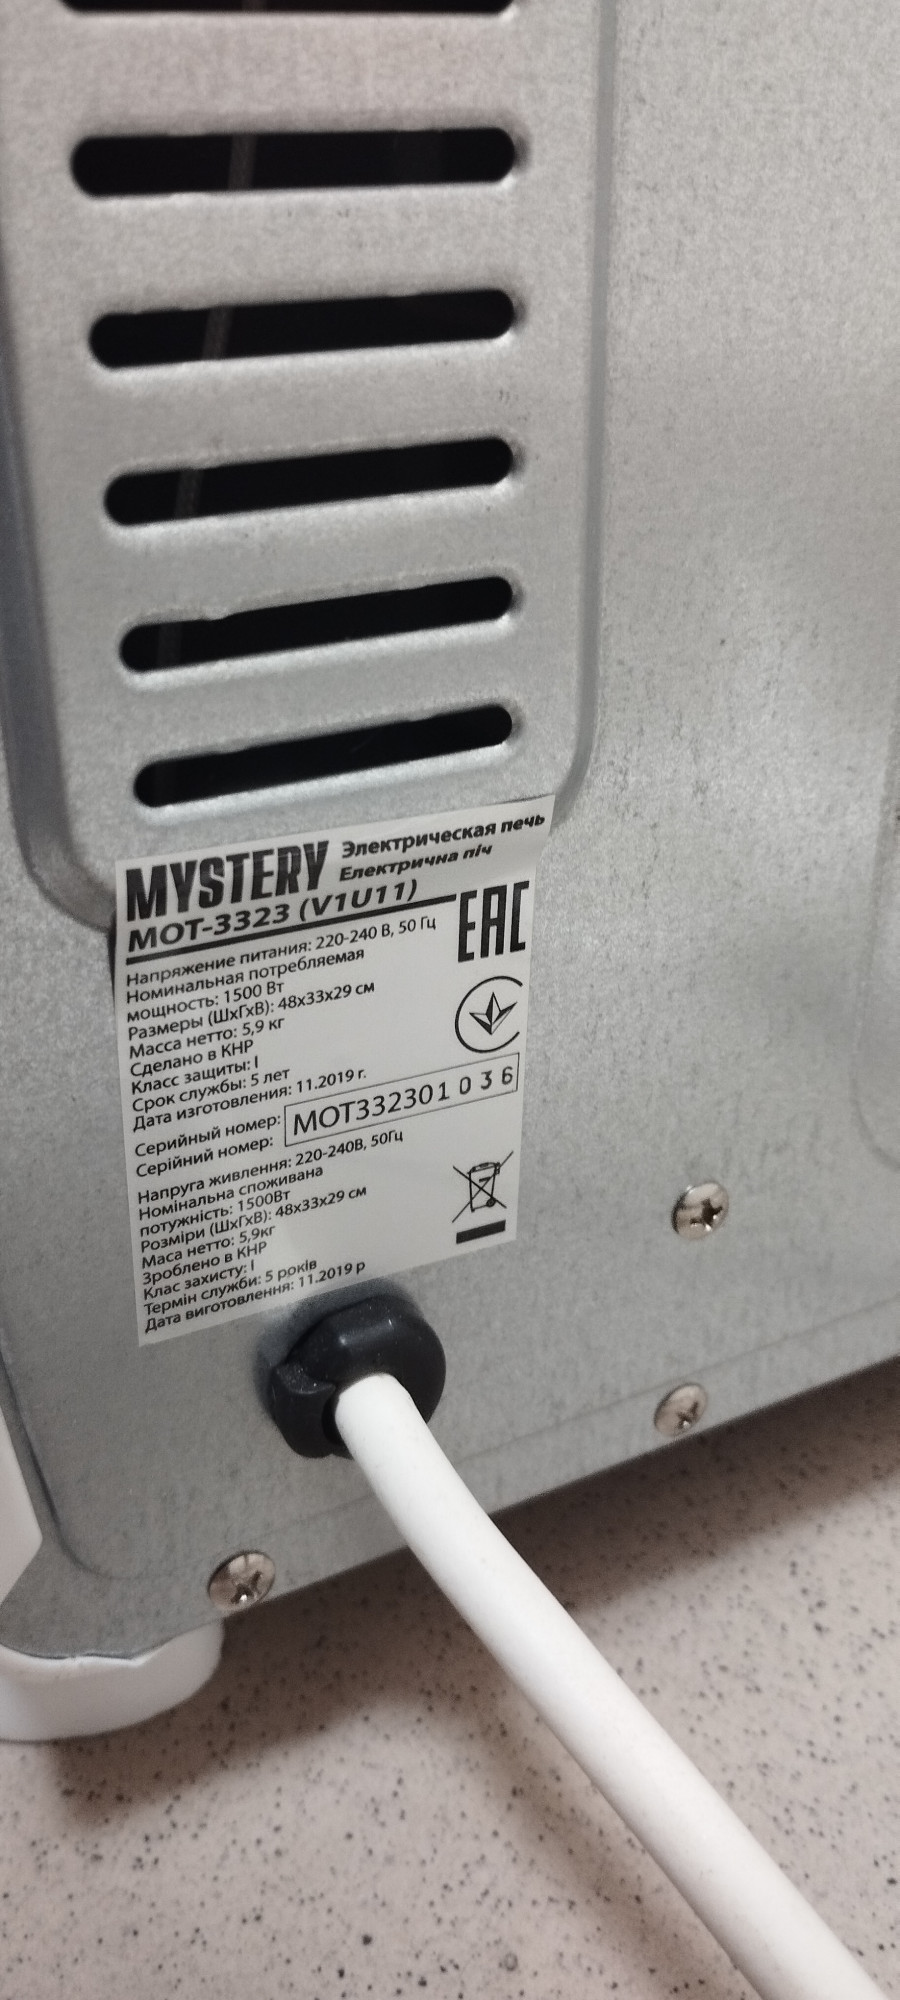 Електропіч Mystery MOT-3323 2